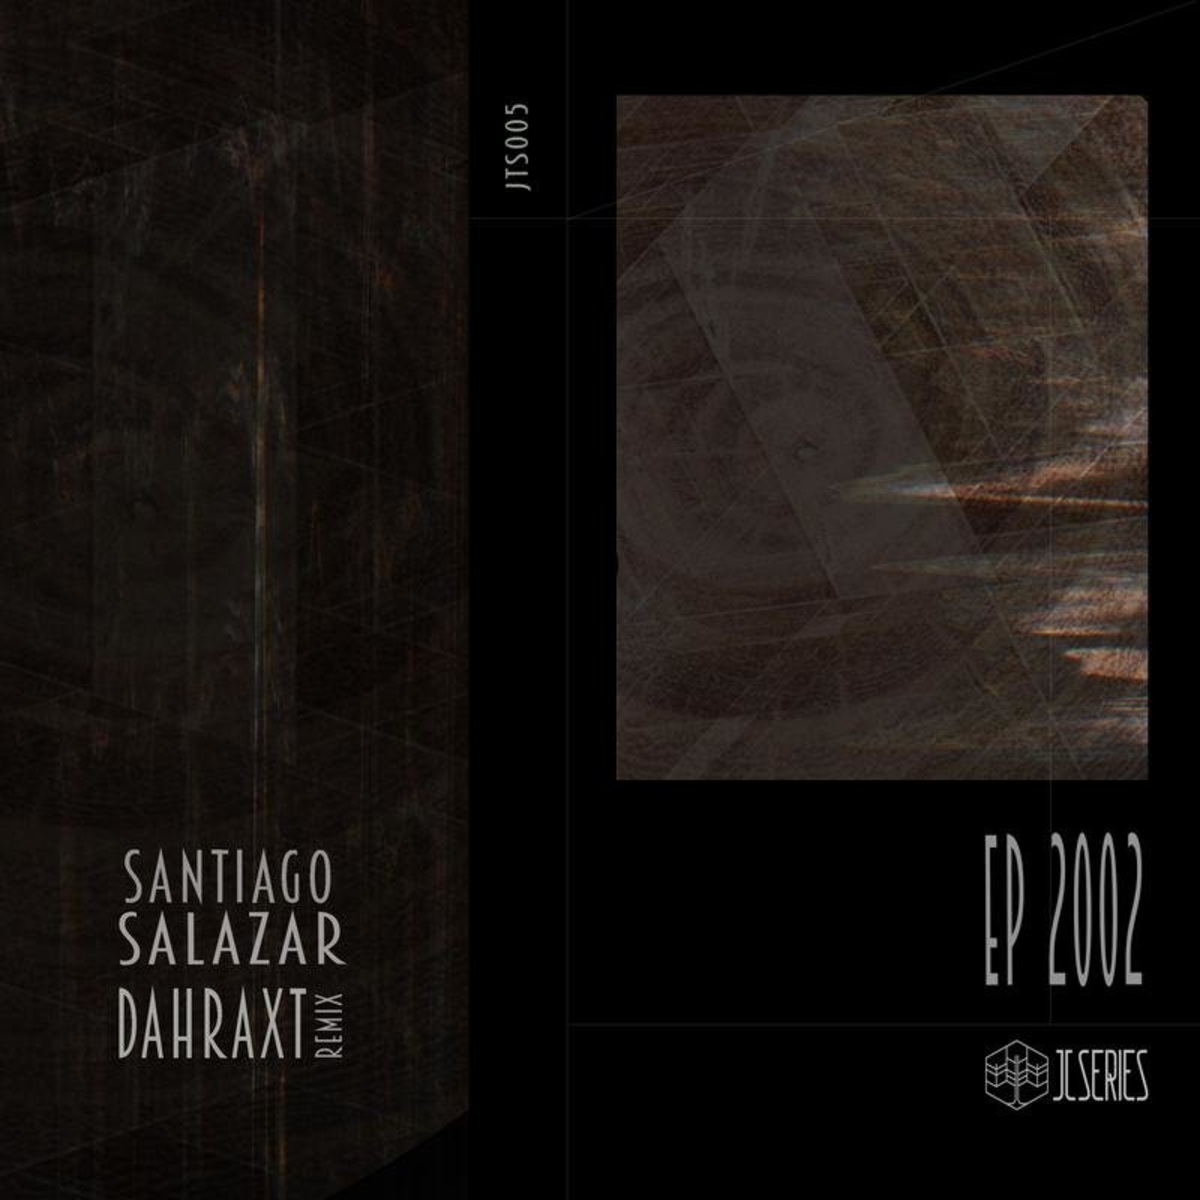 image cover: Santiago Salazar - EP 2002 / JTseries